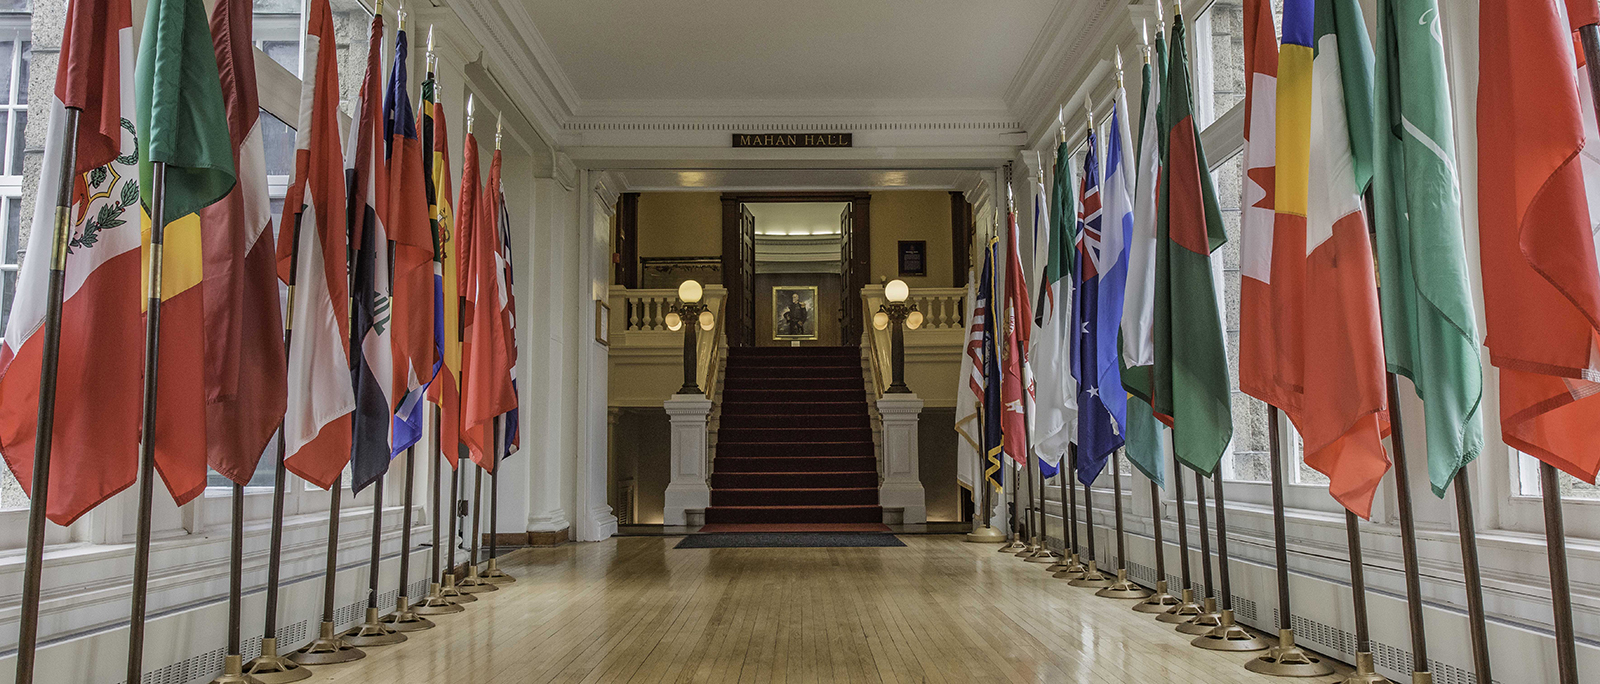 Flags in Hallway